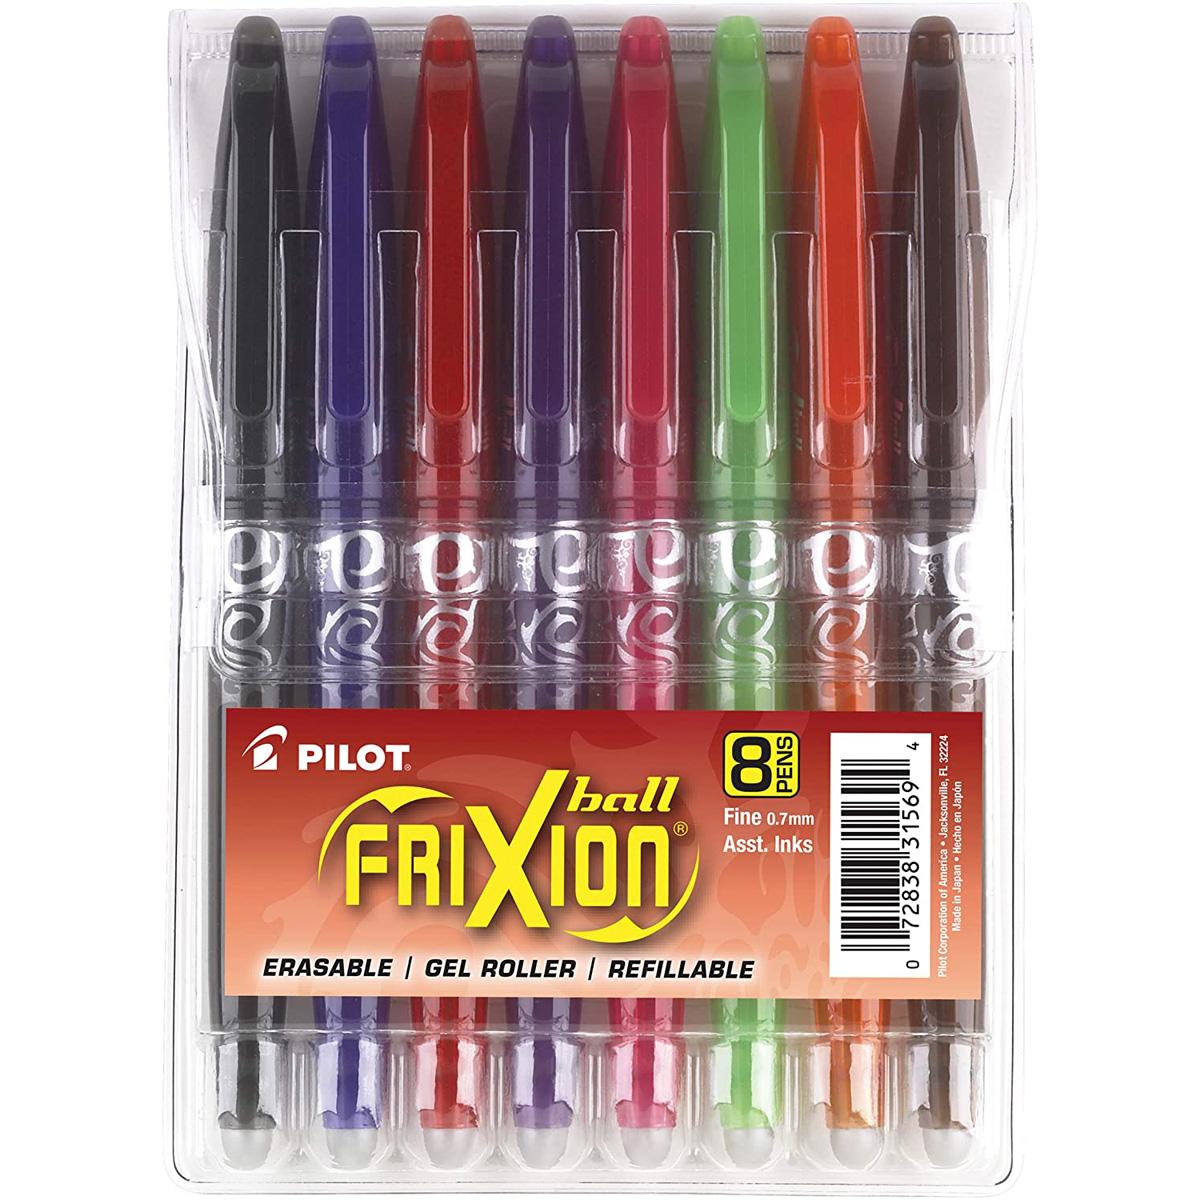 Pilot FriXion Ball Erasable & Refillable Gel Ink Stick Pens for $7.25